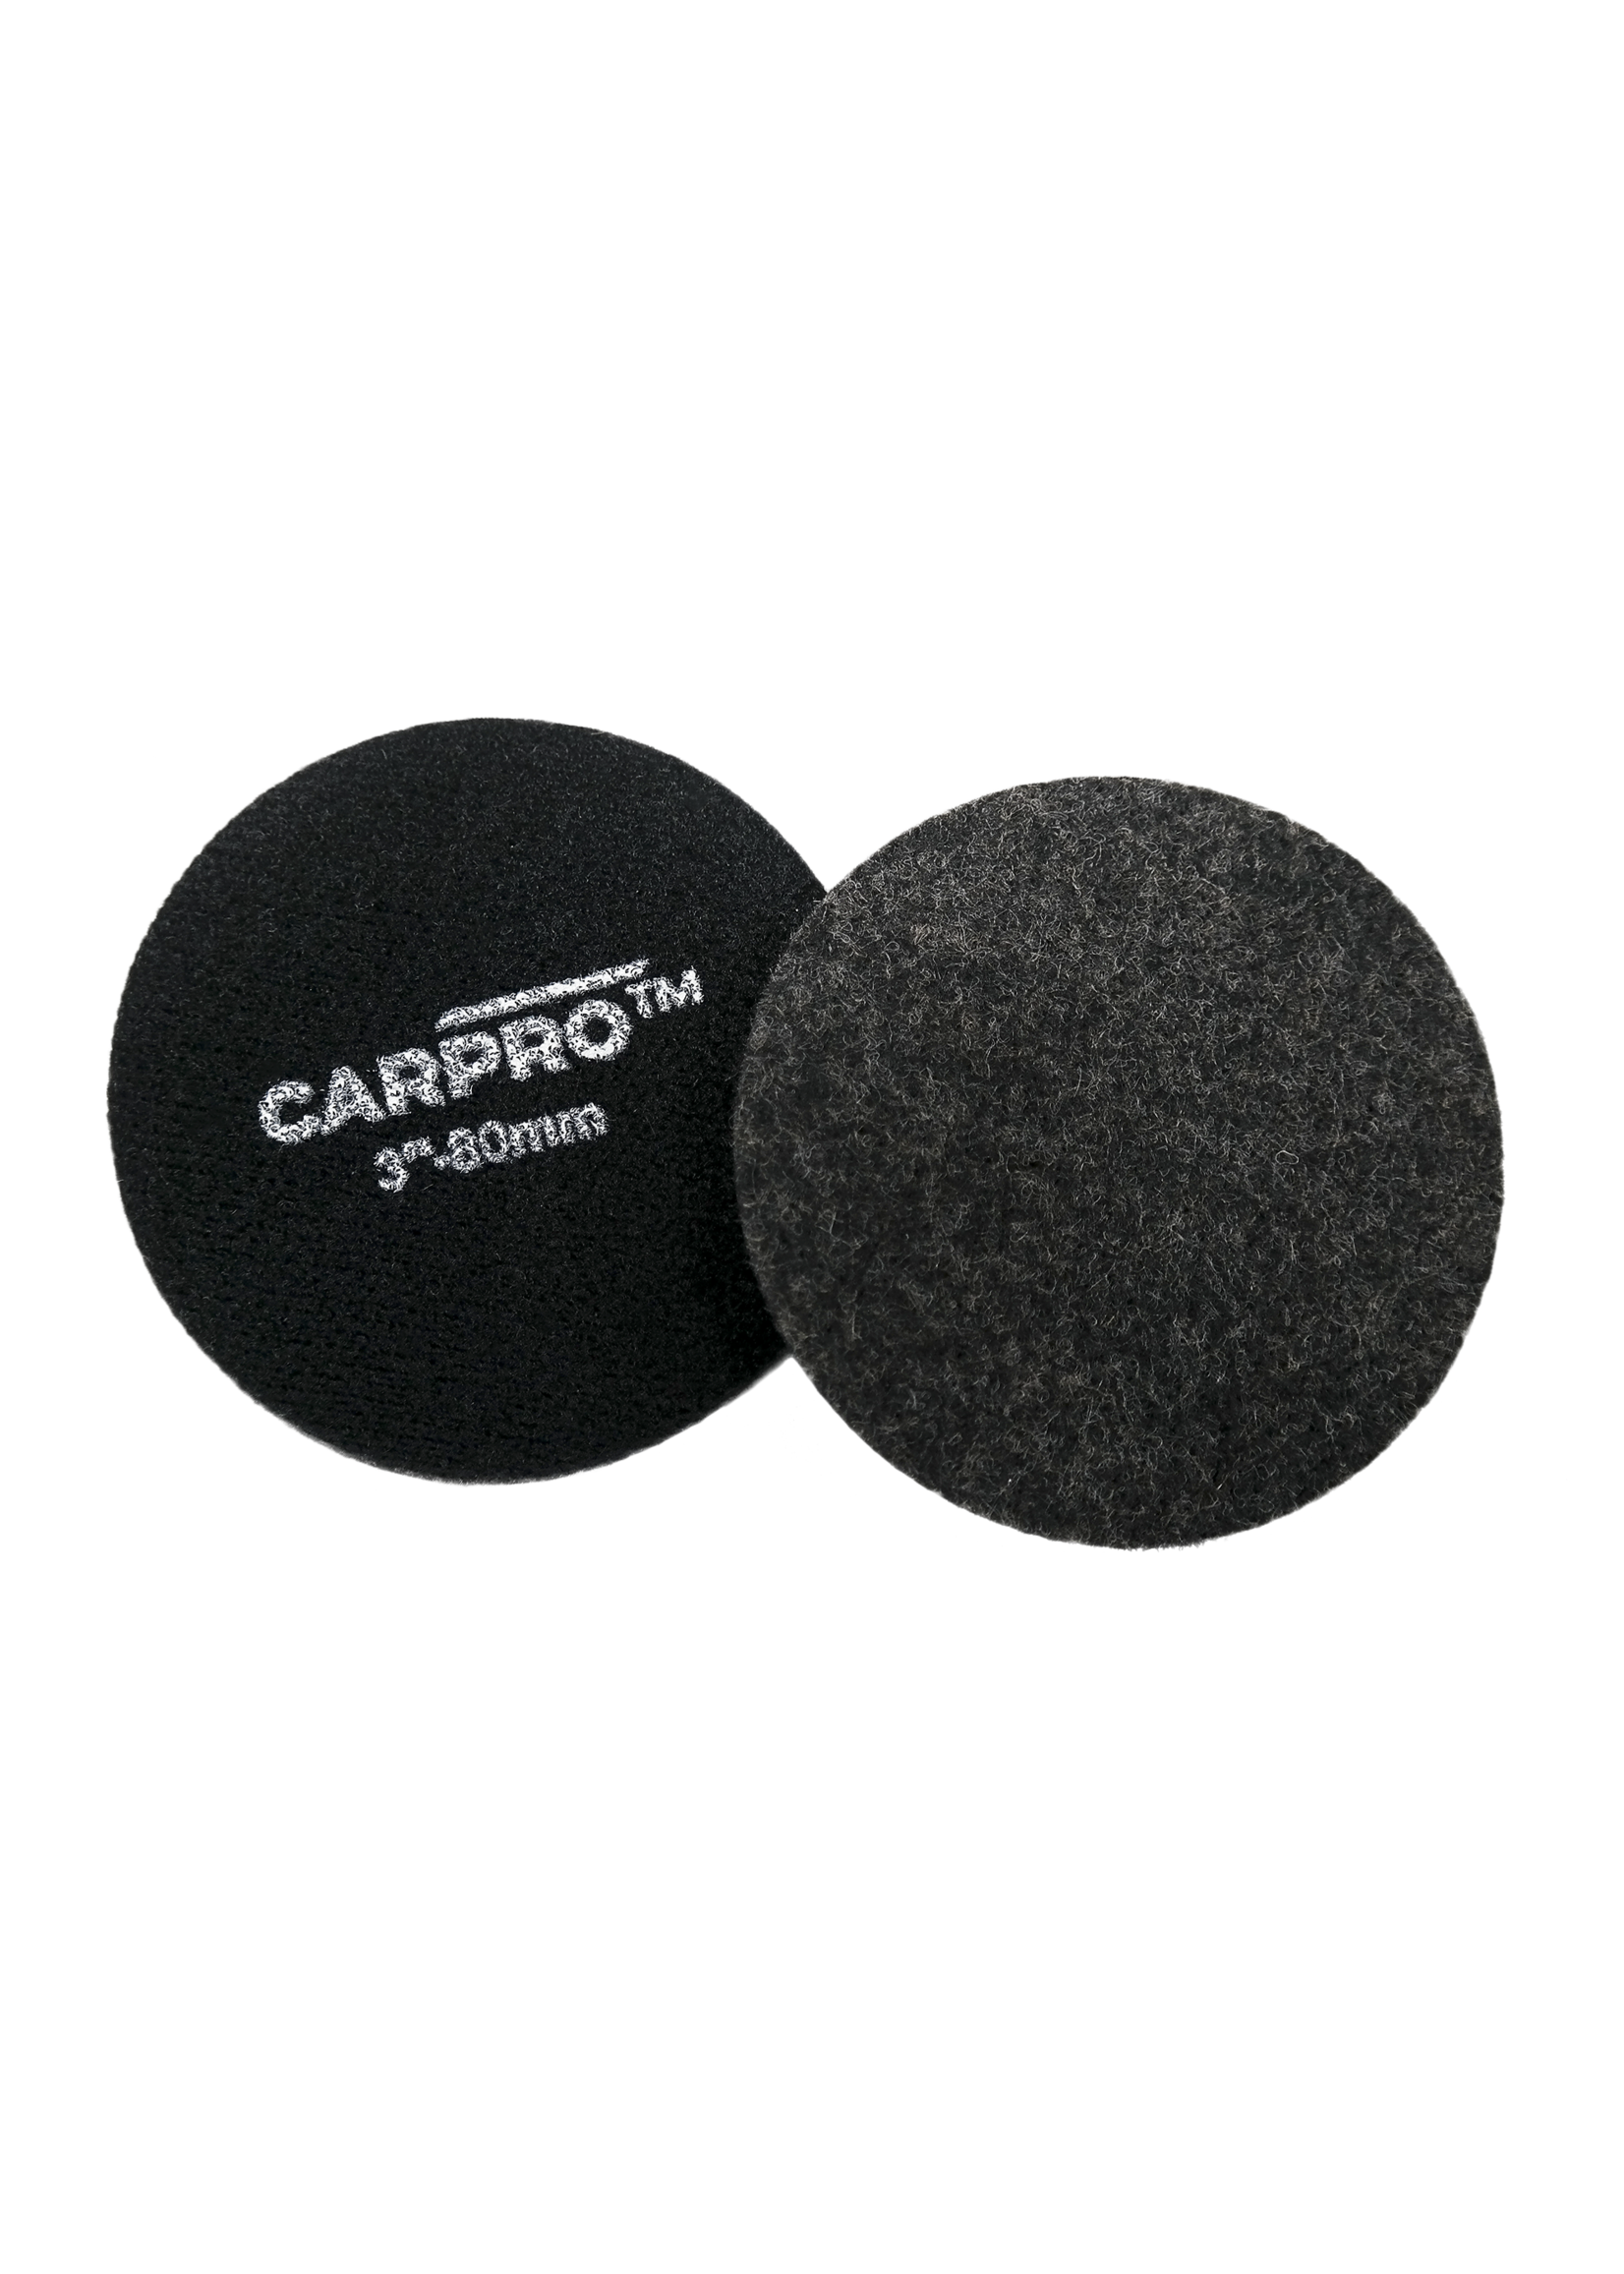 CARPRO CARPRO GlassCUT Pad